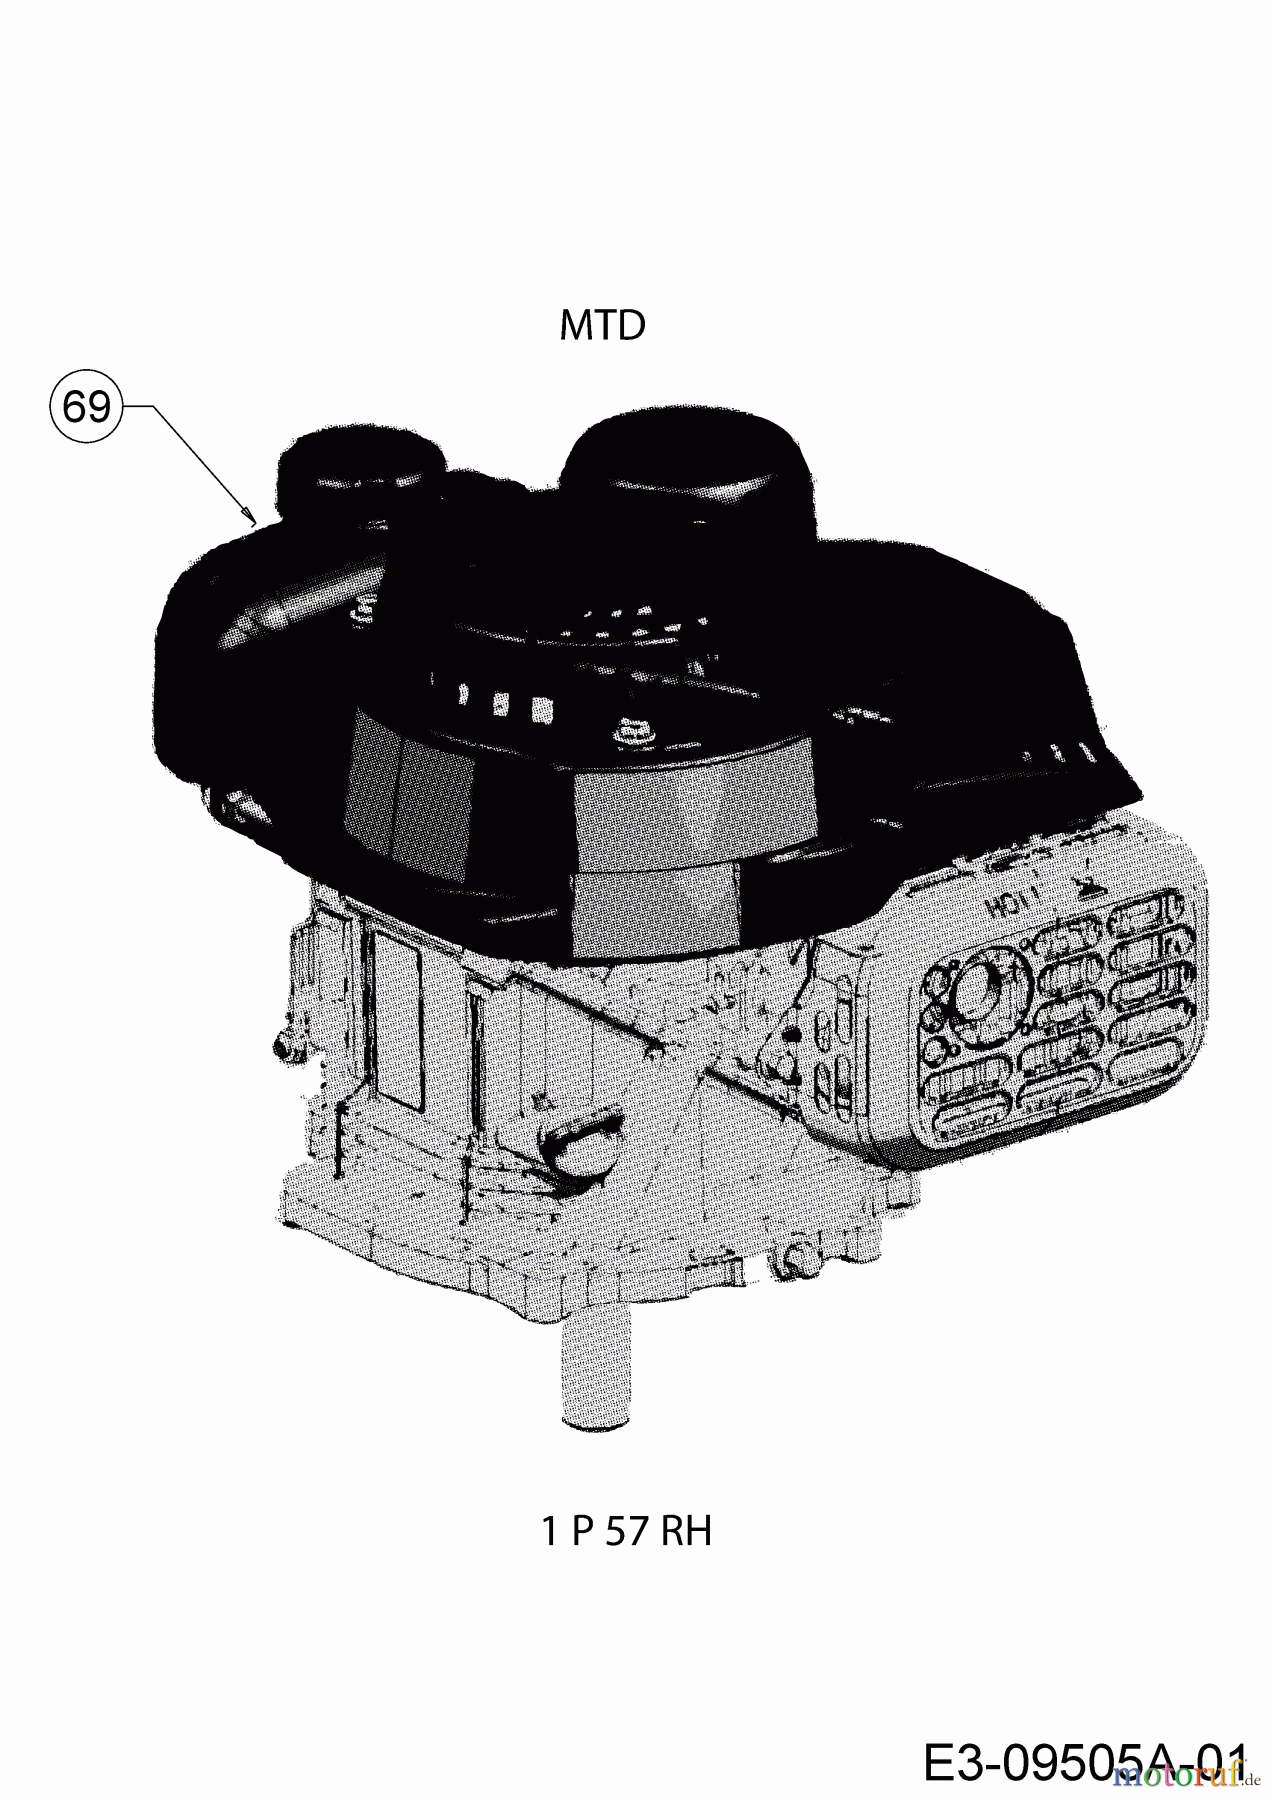  MTD Petrol mower P 46 T 11D-TASJ600  (2019) Engine MTD